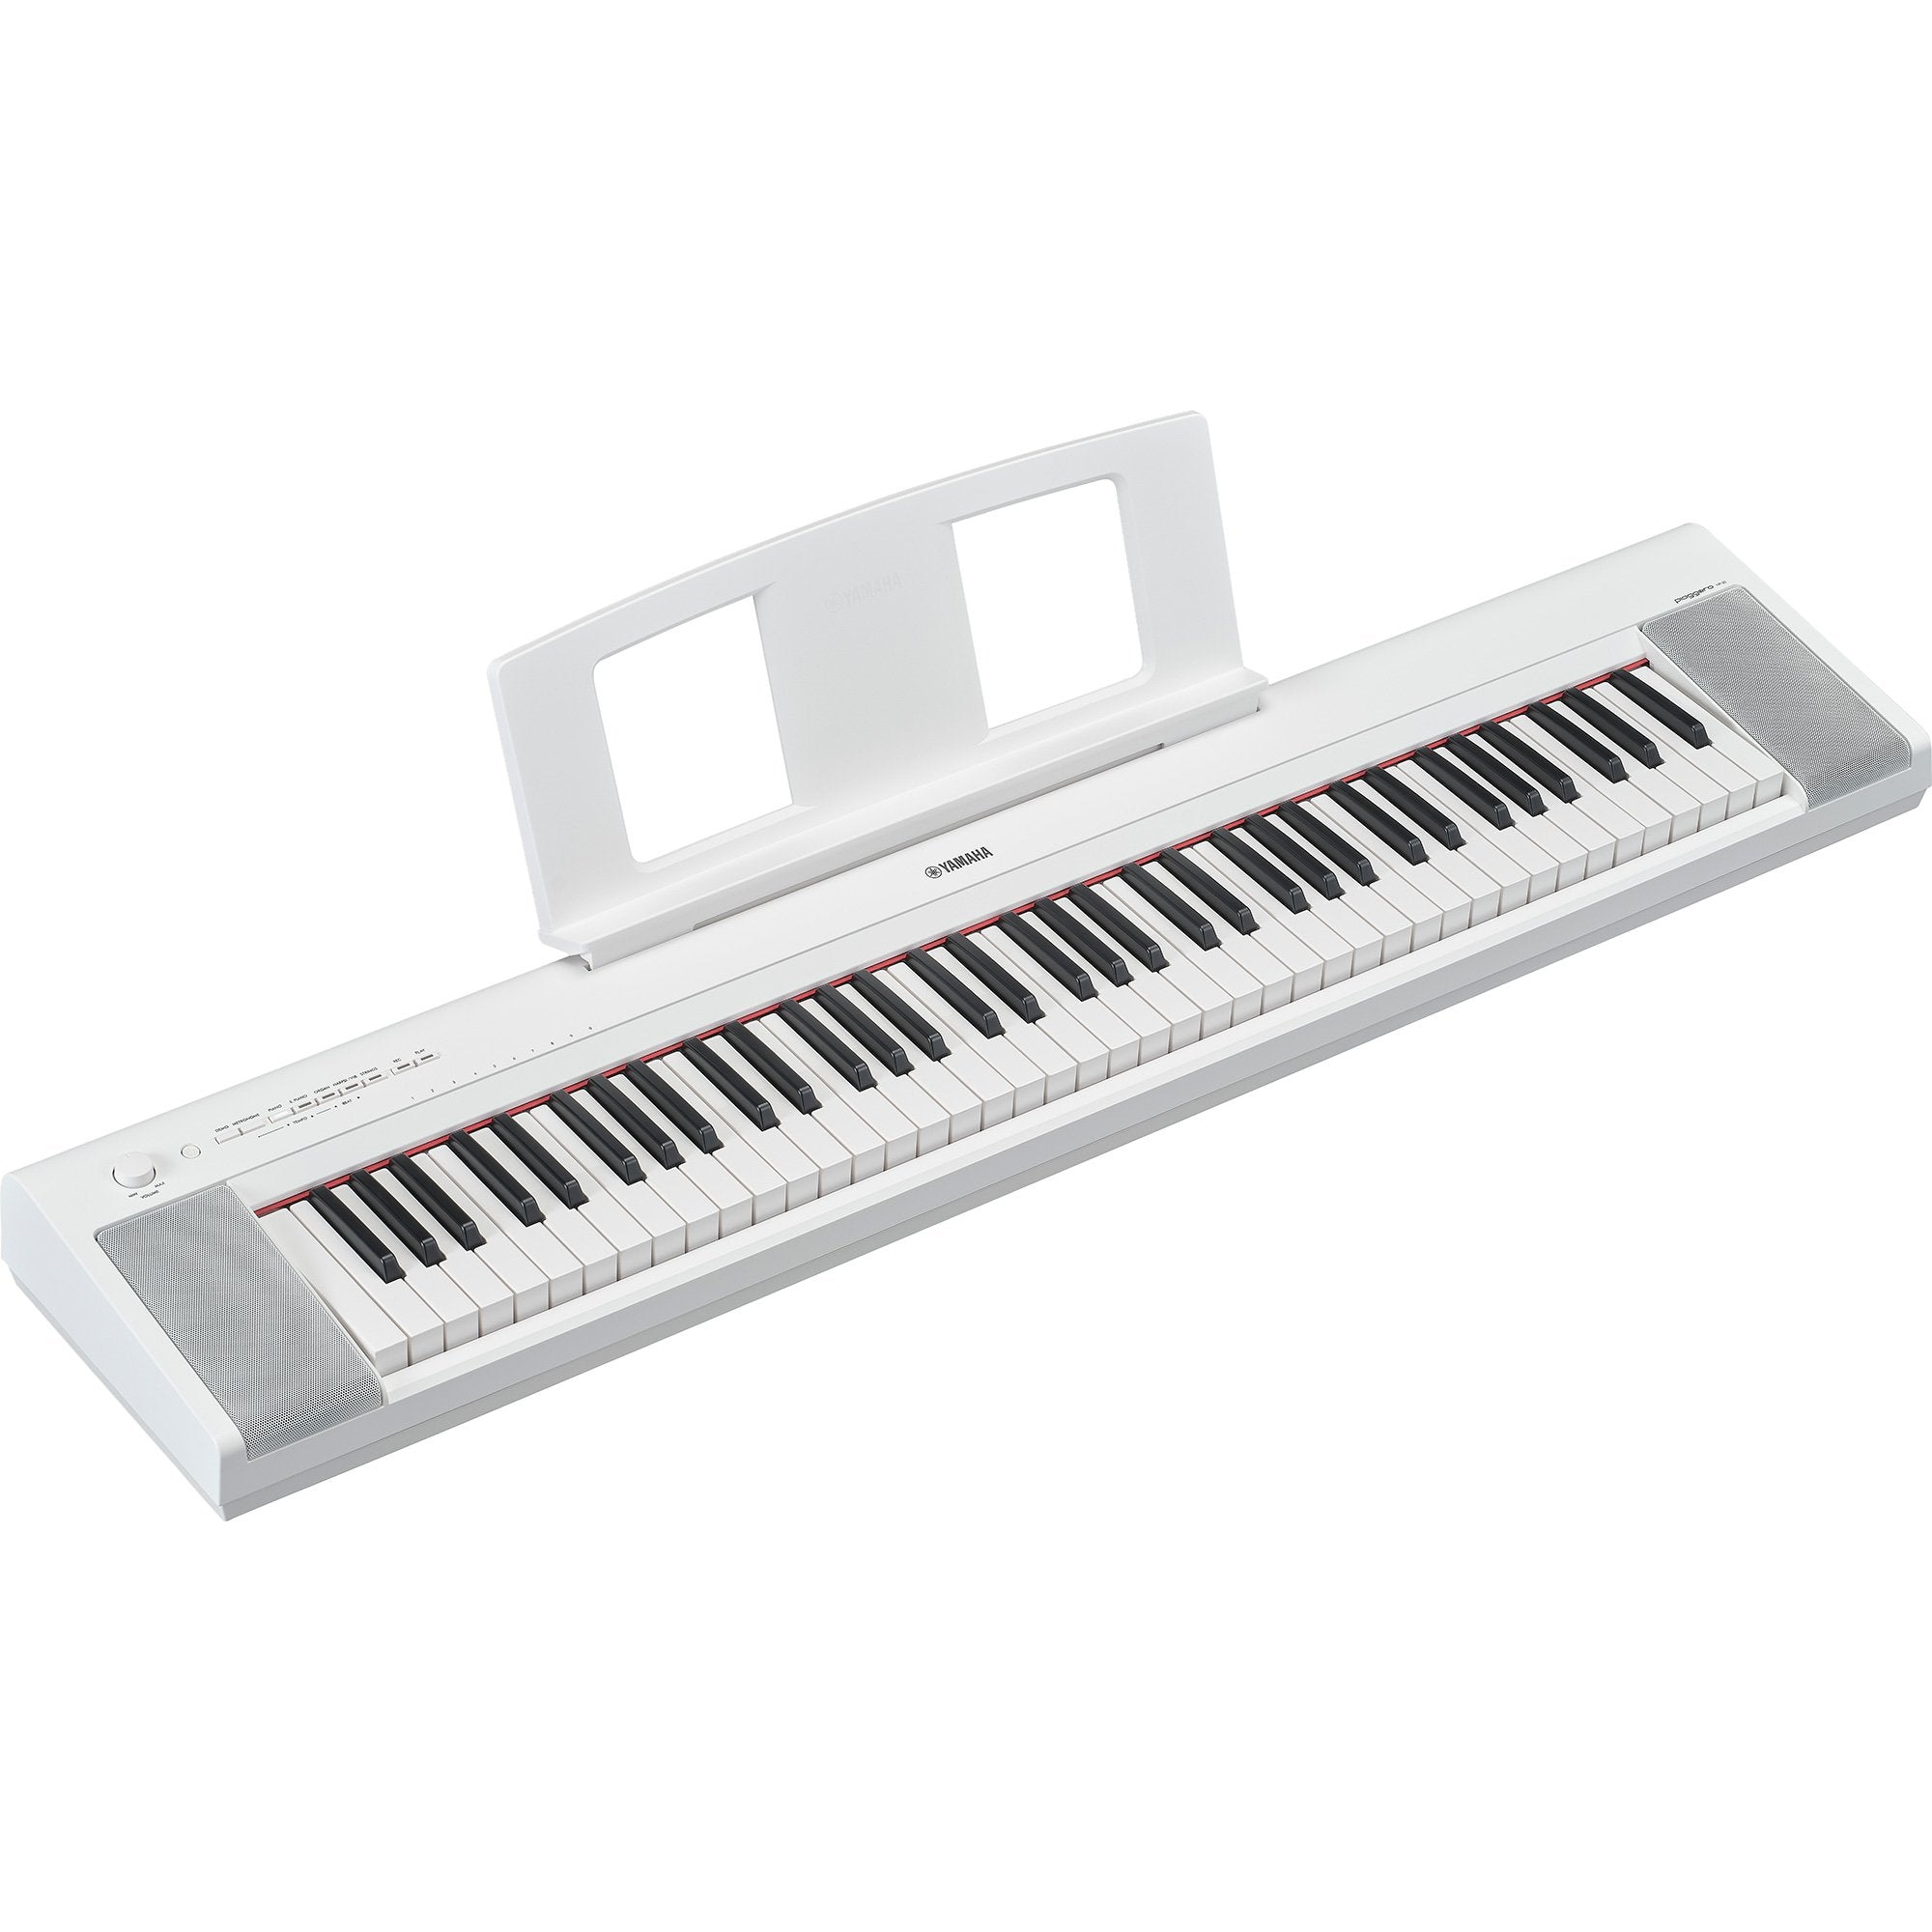 Yamaha Piaggero NP-35 數碼鍵琴 (連電源變壓器)